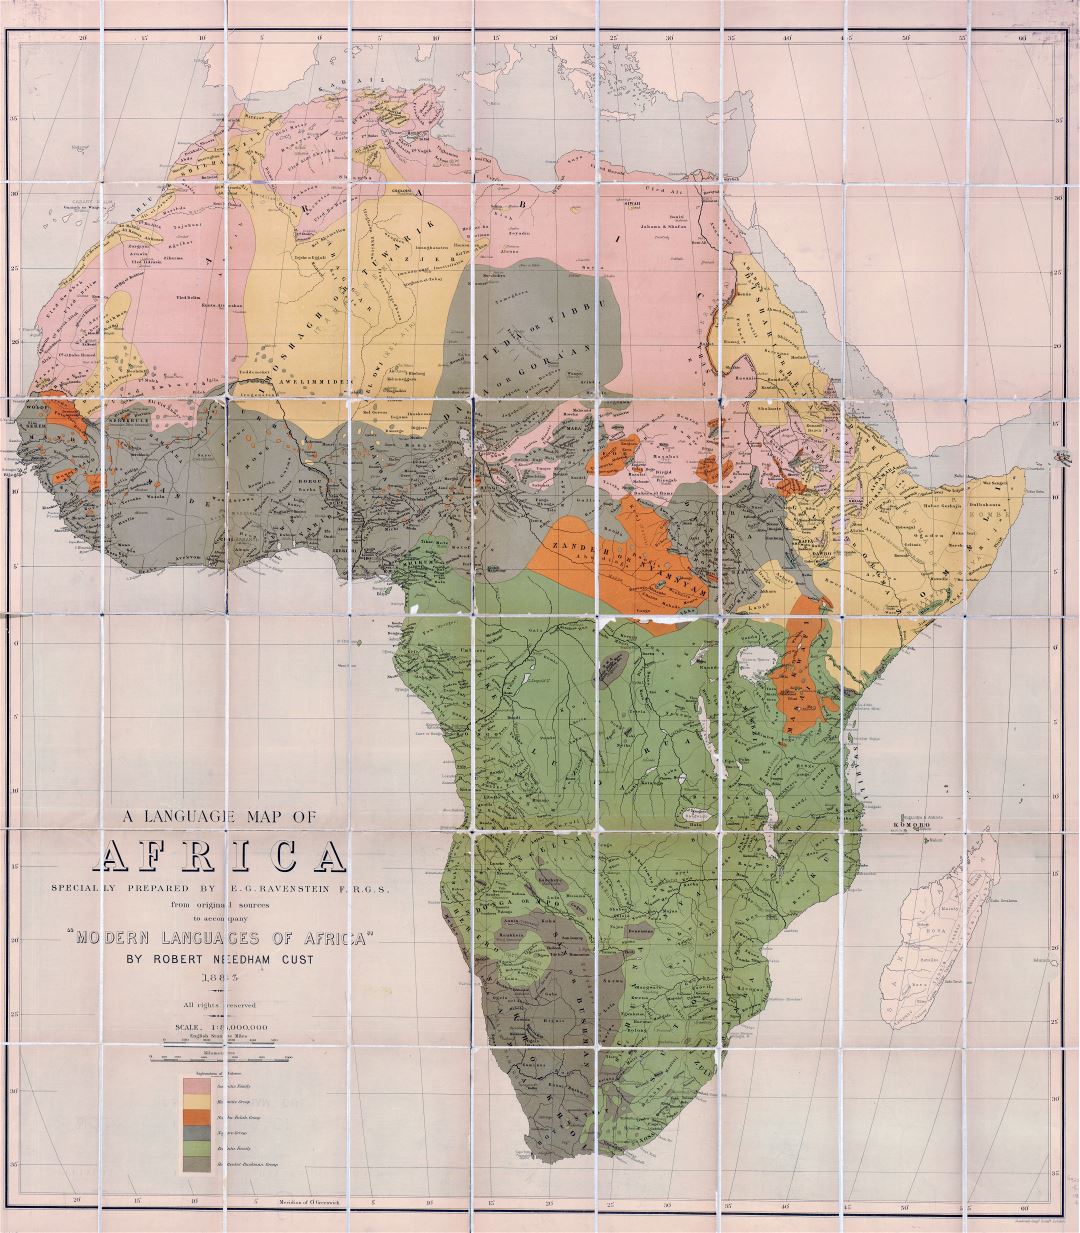 Detalle de gran escala del mapa viejo lenguaje de África - 1883